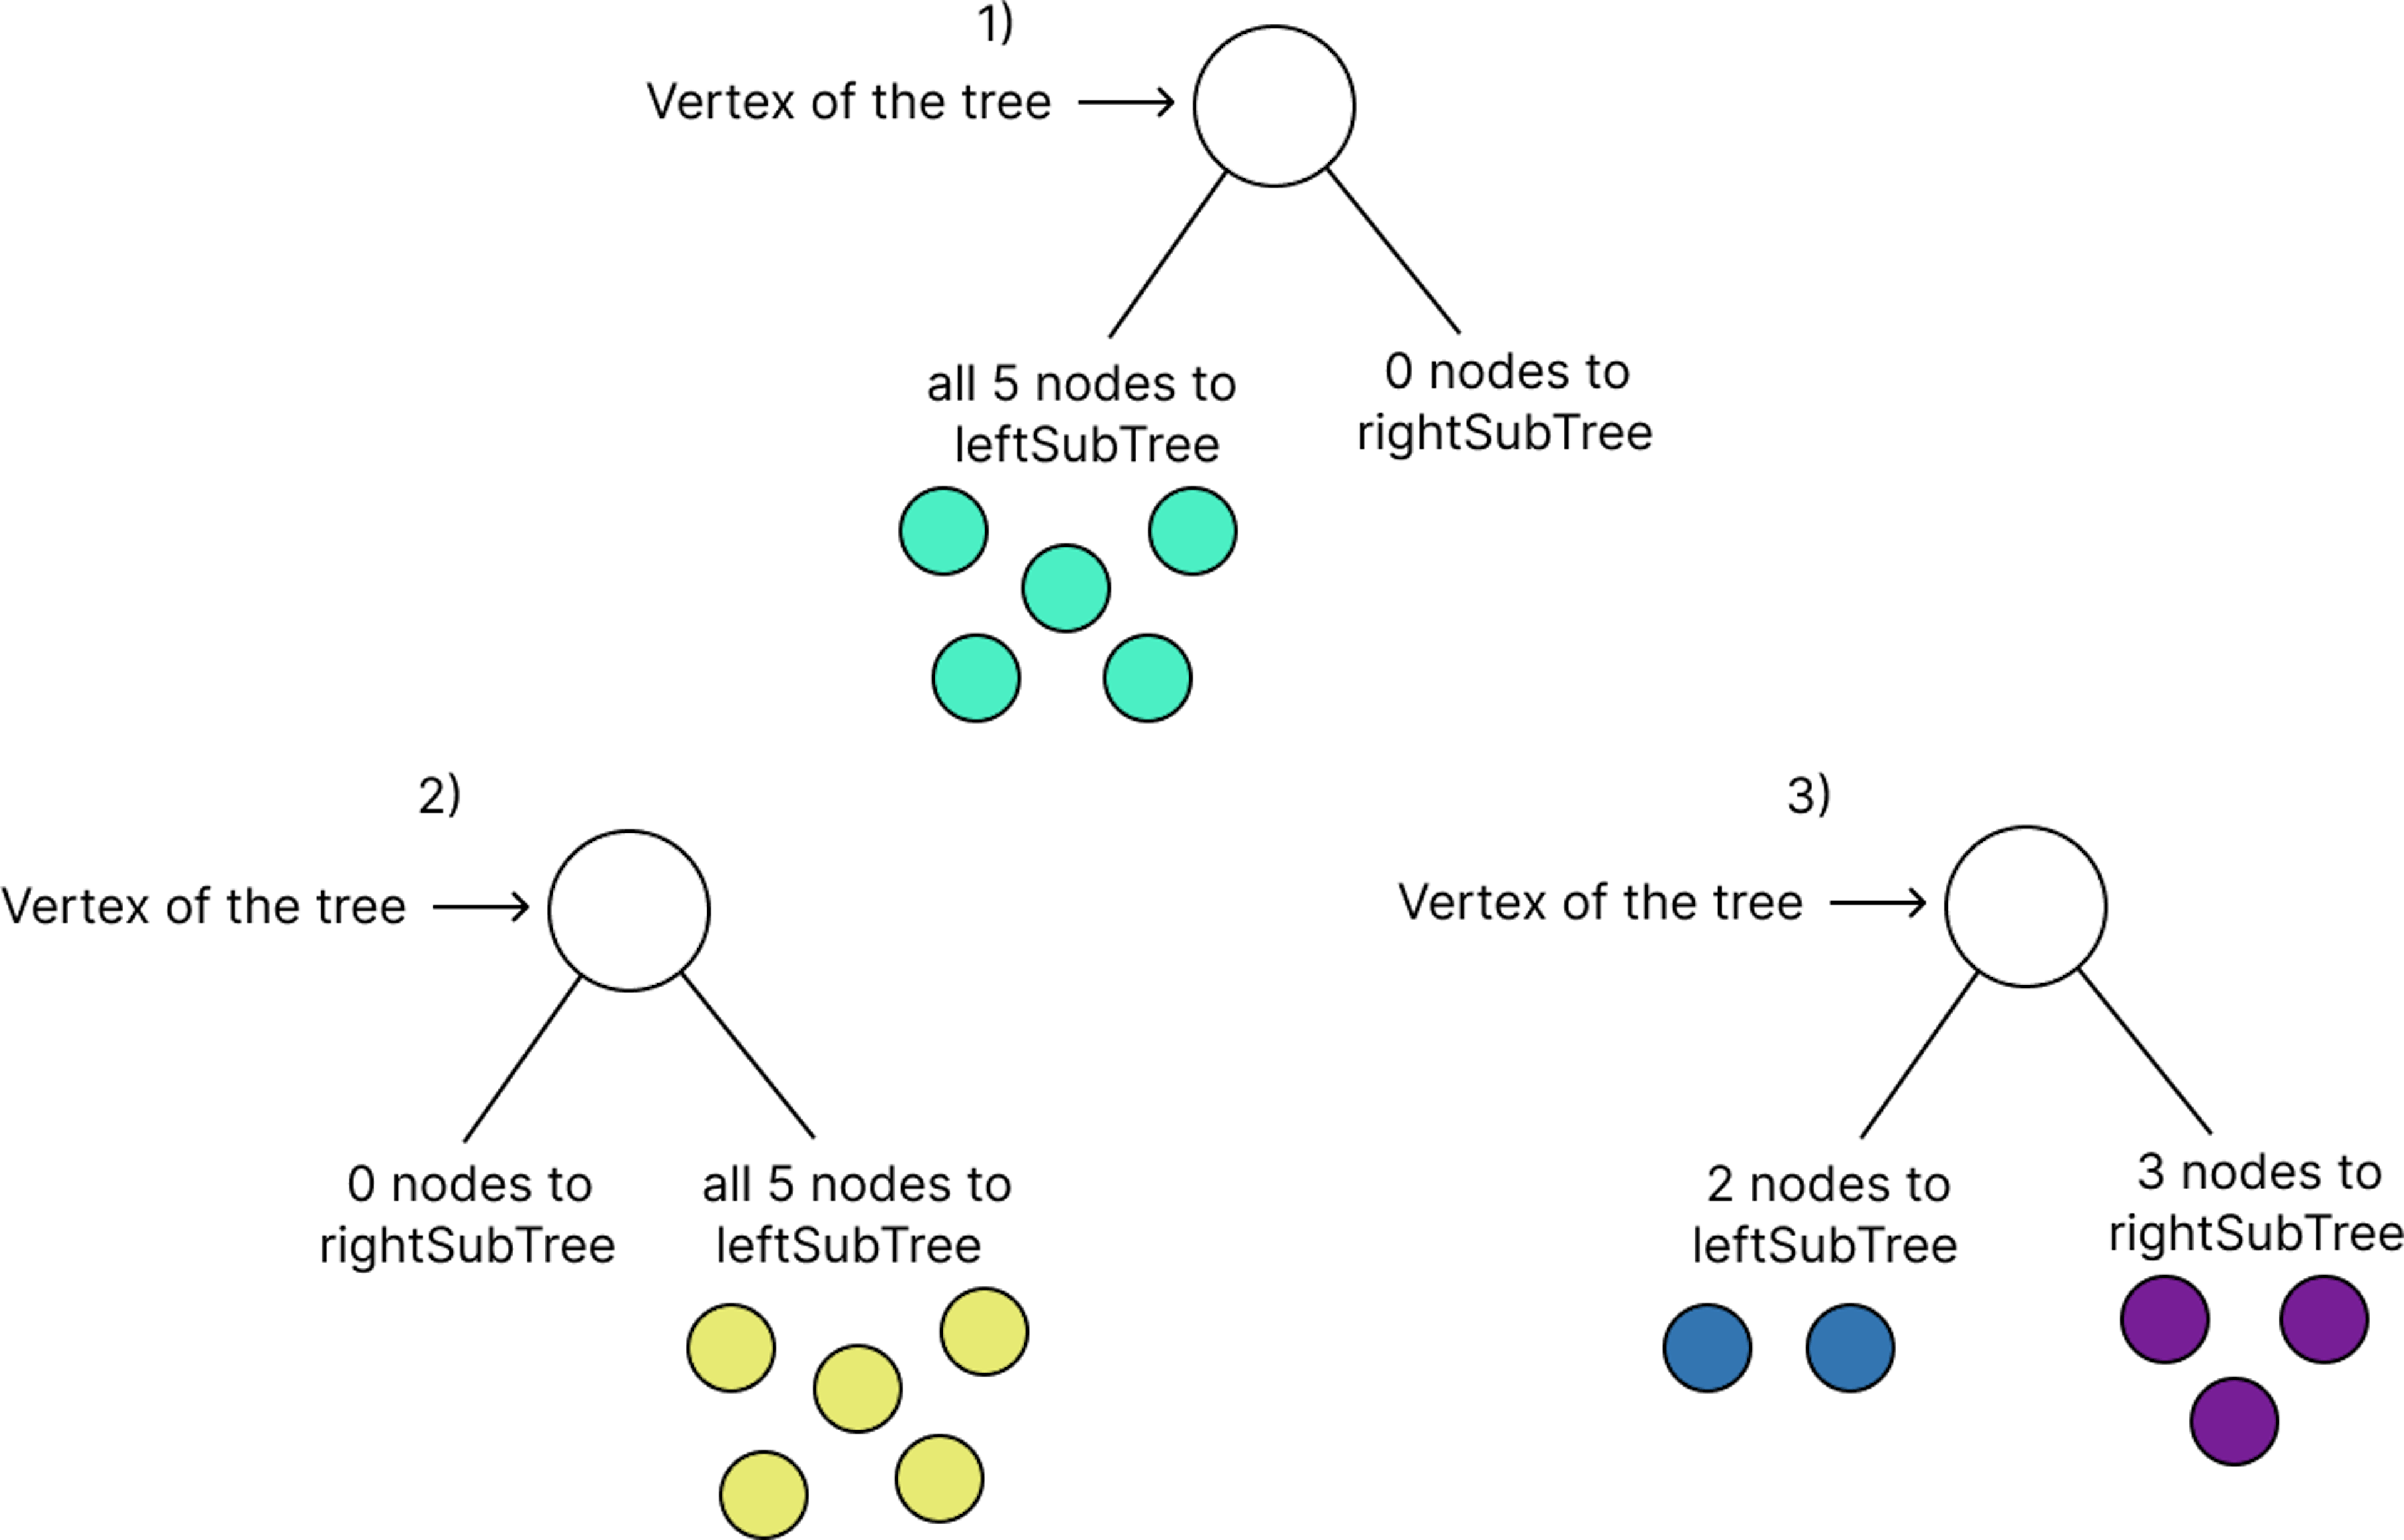               Distribution of nodes